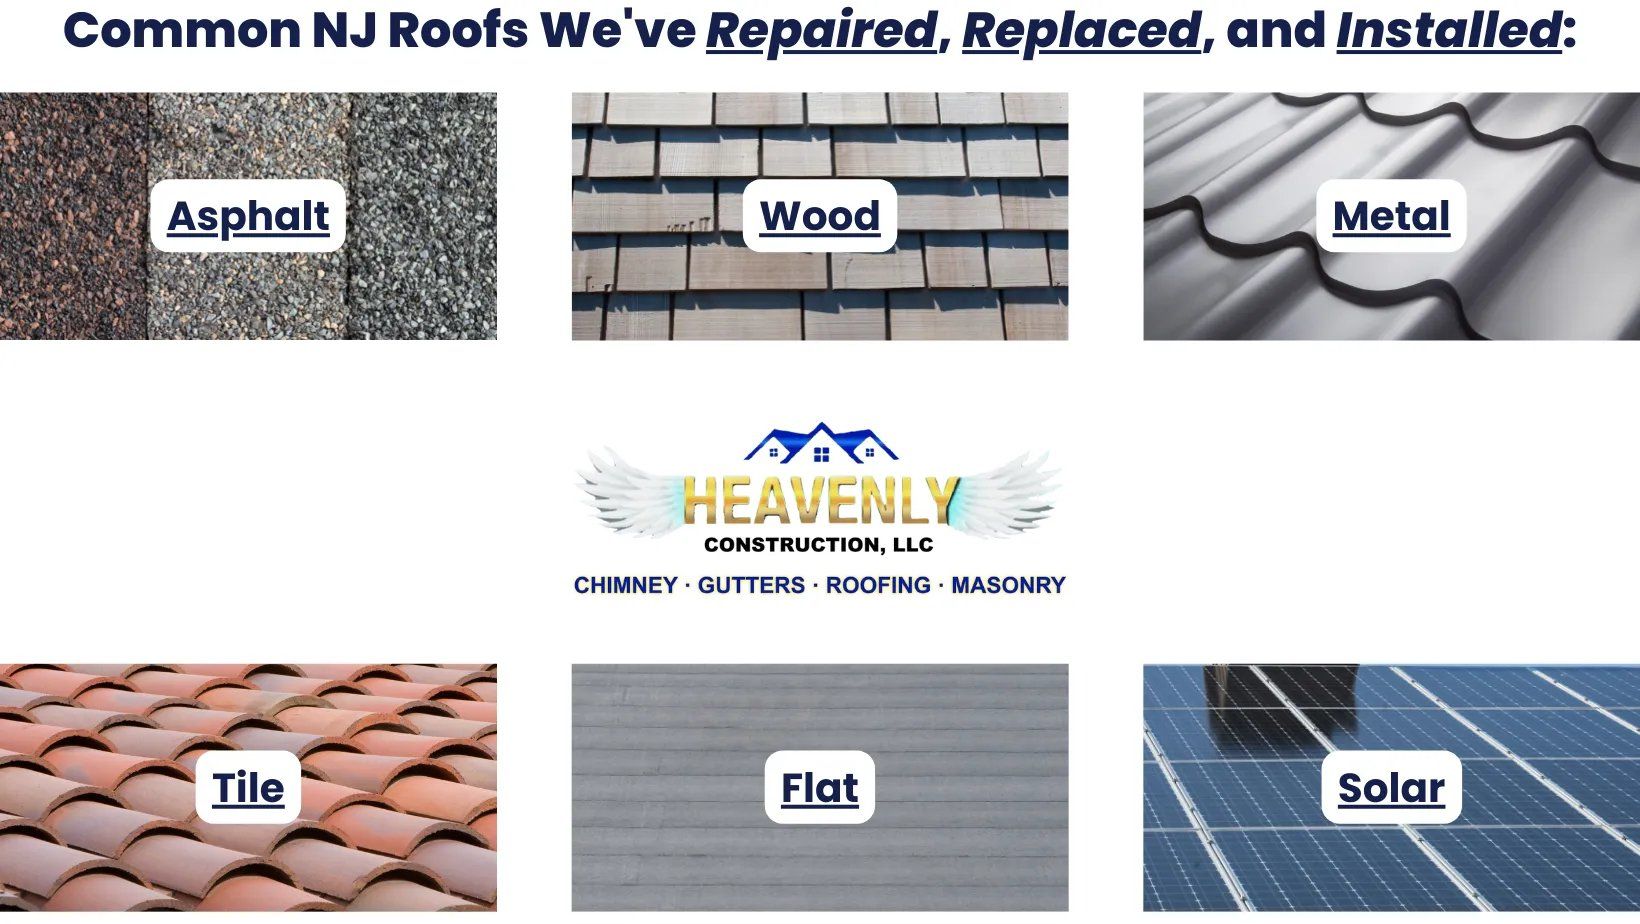 Asphalt, wood, metal, tile, flat, and solar roofing materials.